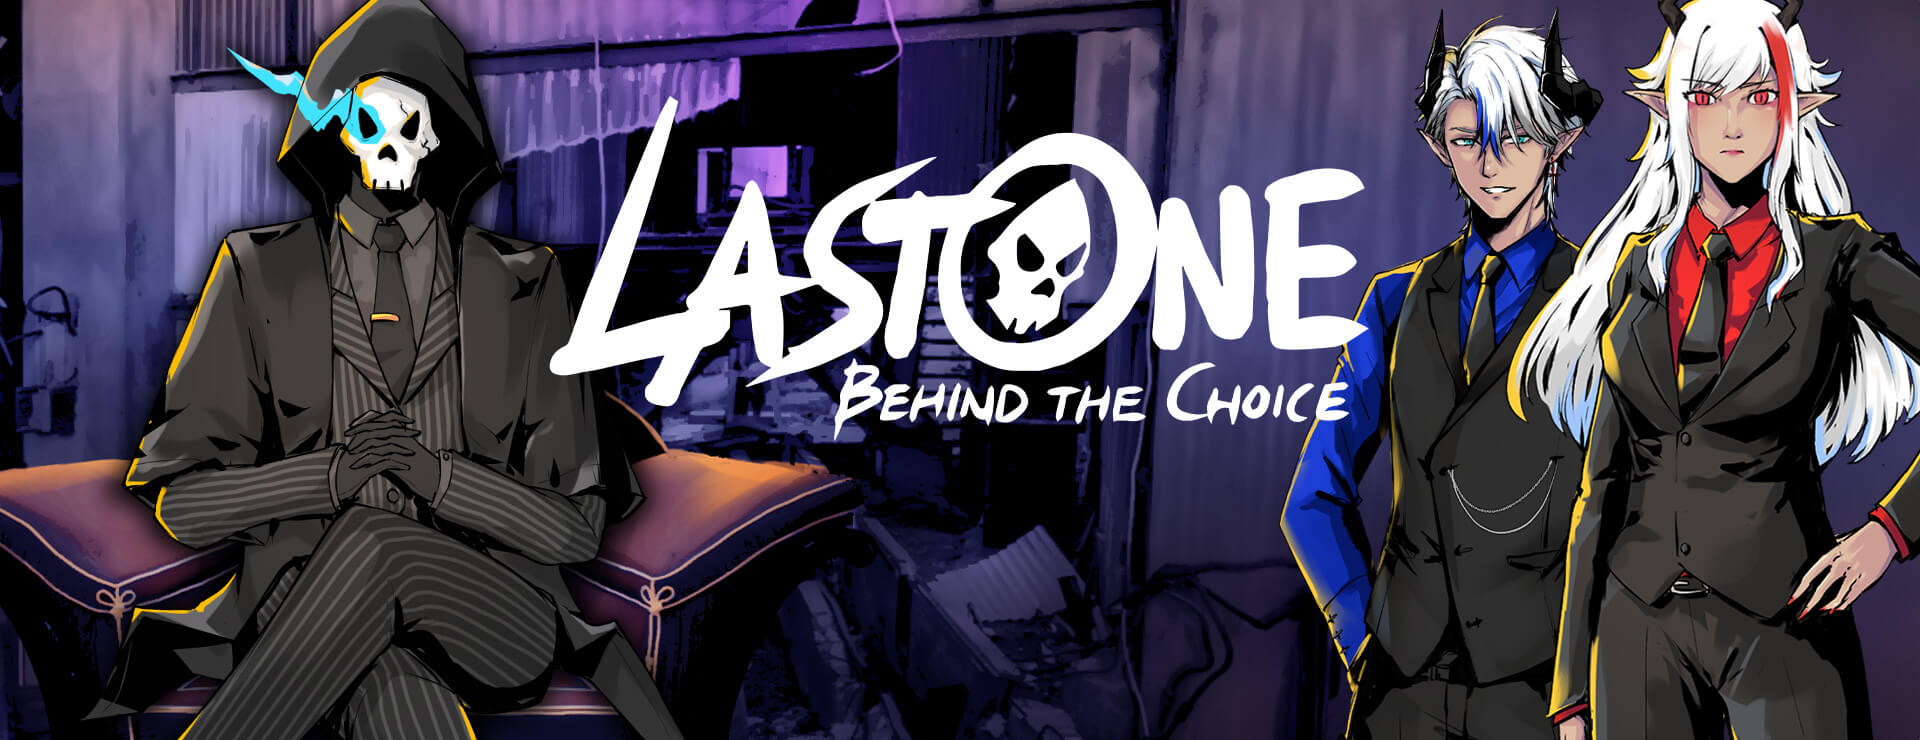 Lastone: Behind the Choice - ビジュアルノベル ゲーム